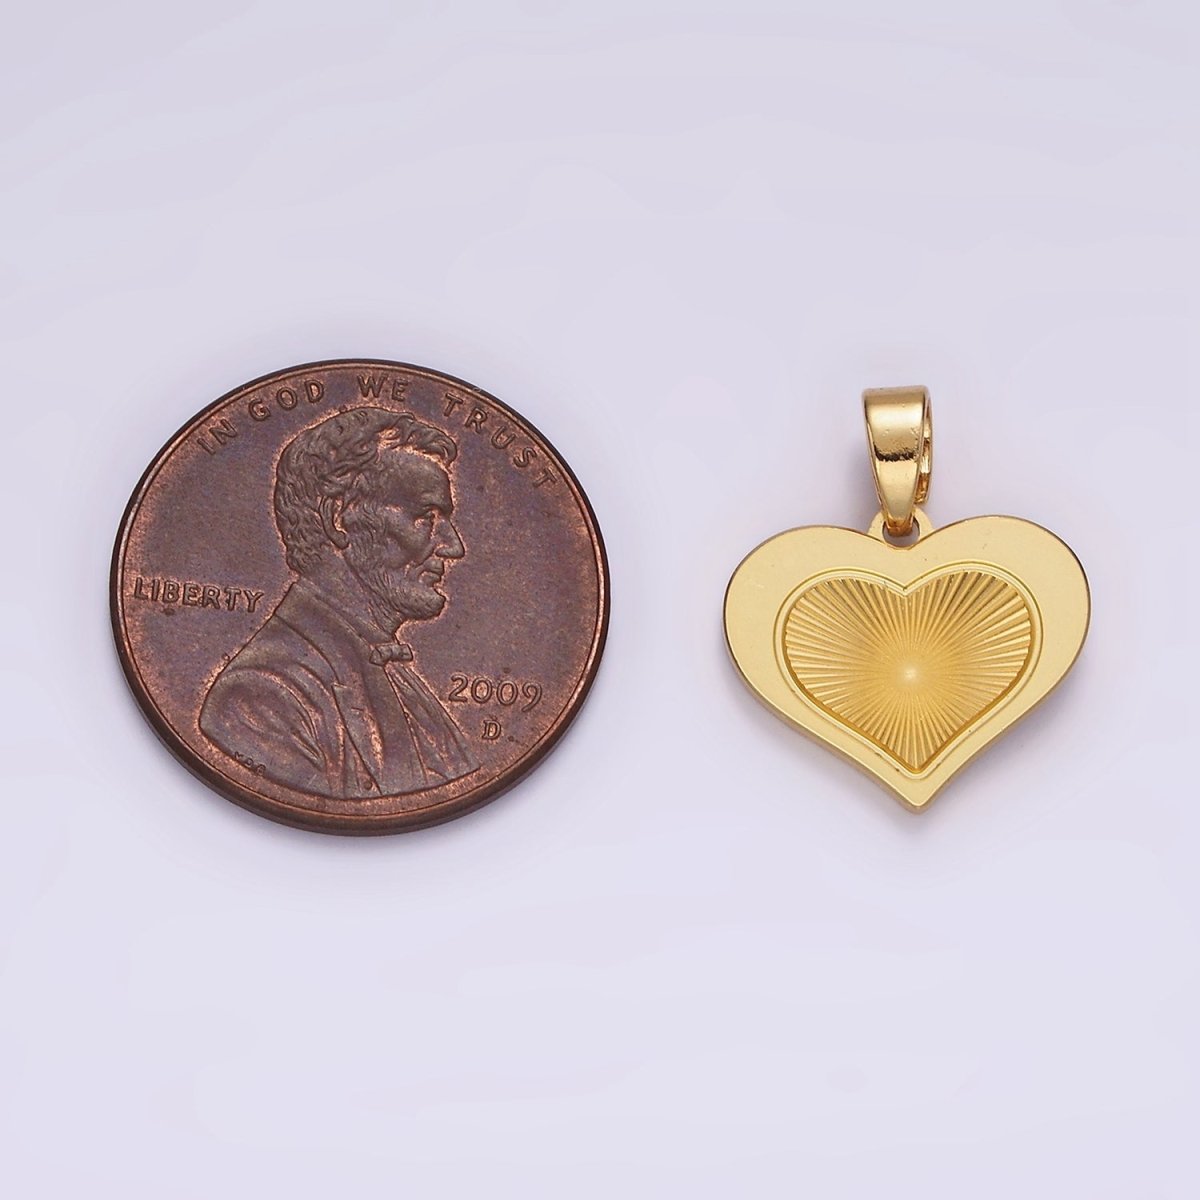 Stainless Steel Heart Sunburst Minimalist Pendant in Gold & Silver | P866 - DLUXCA